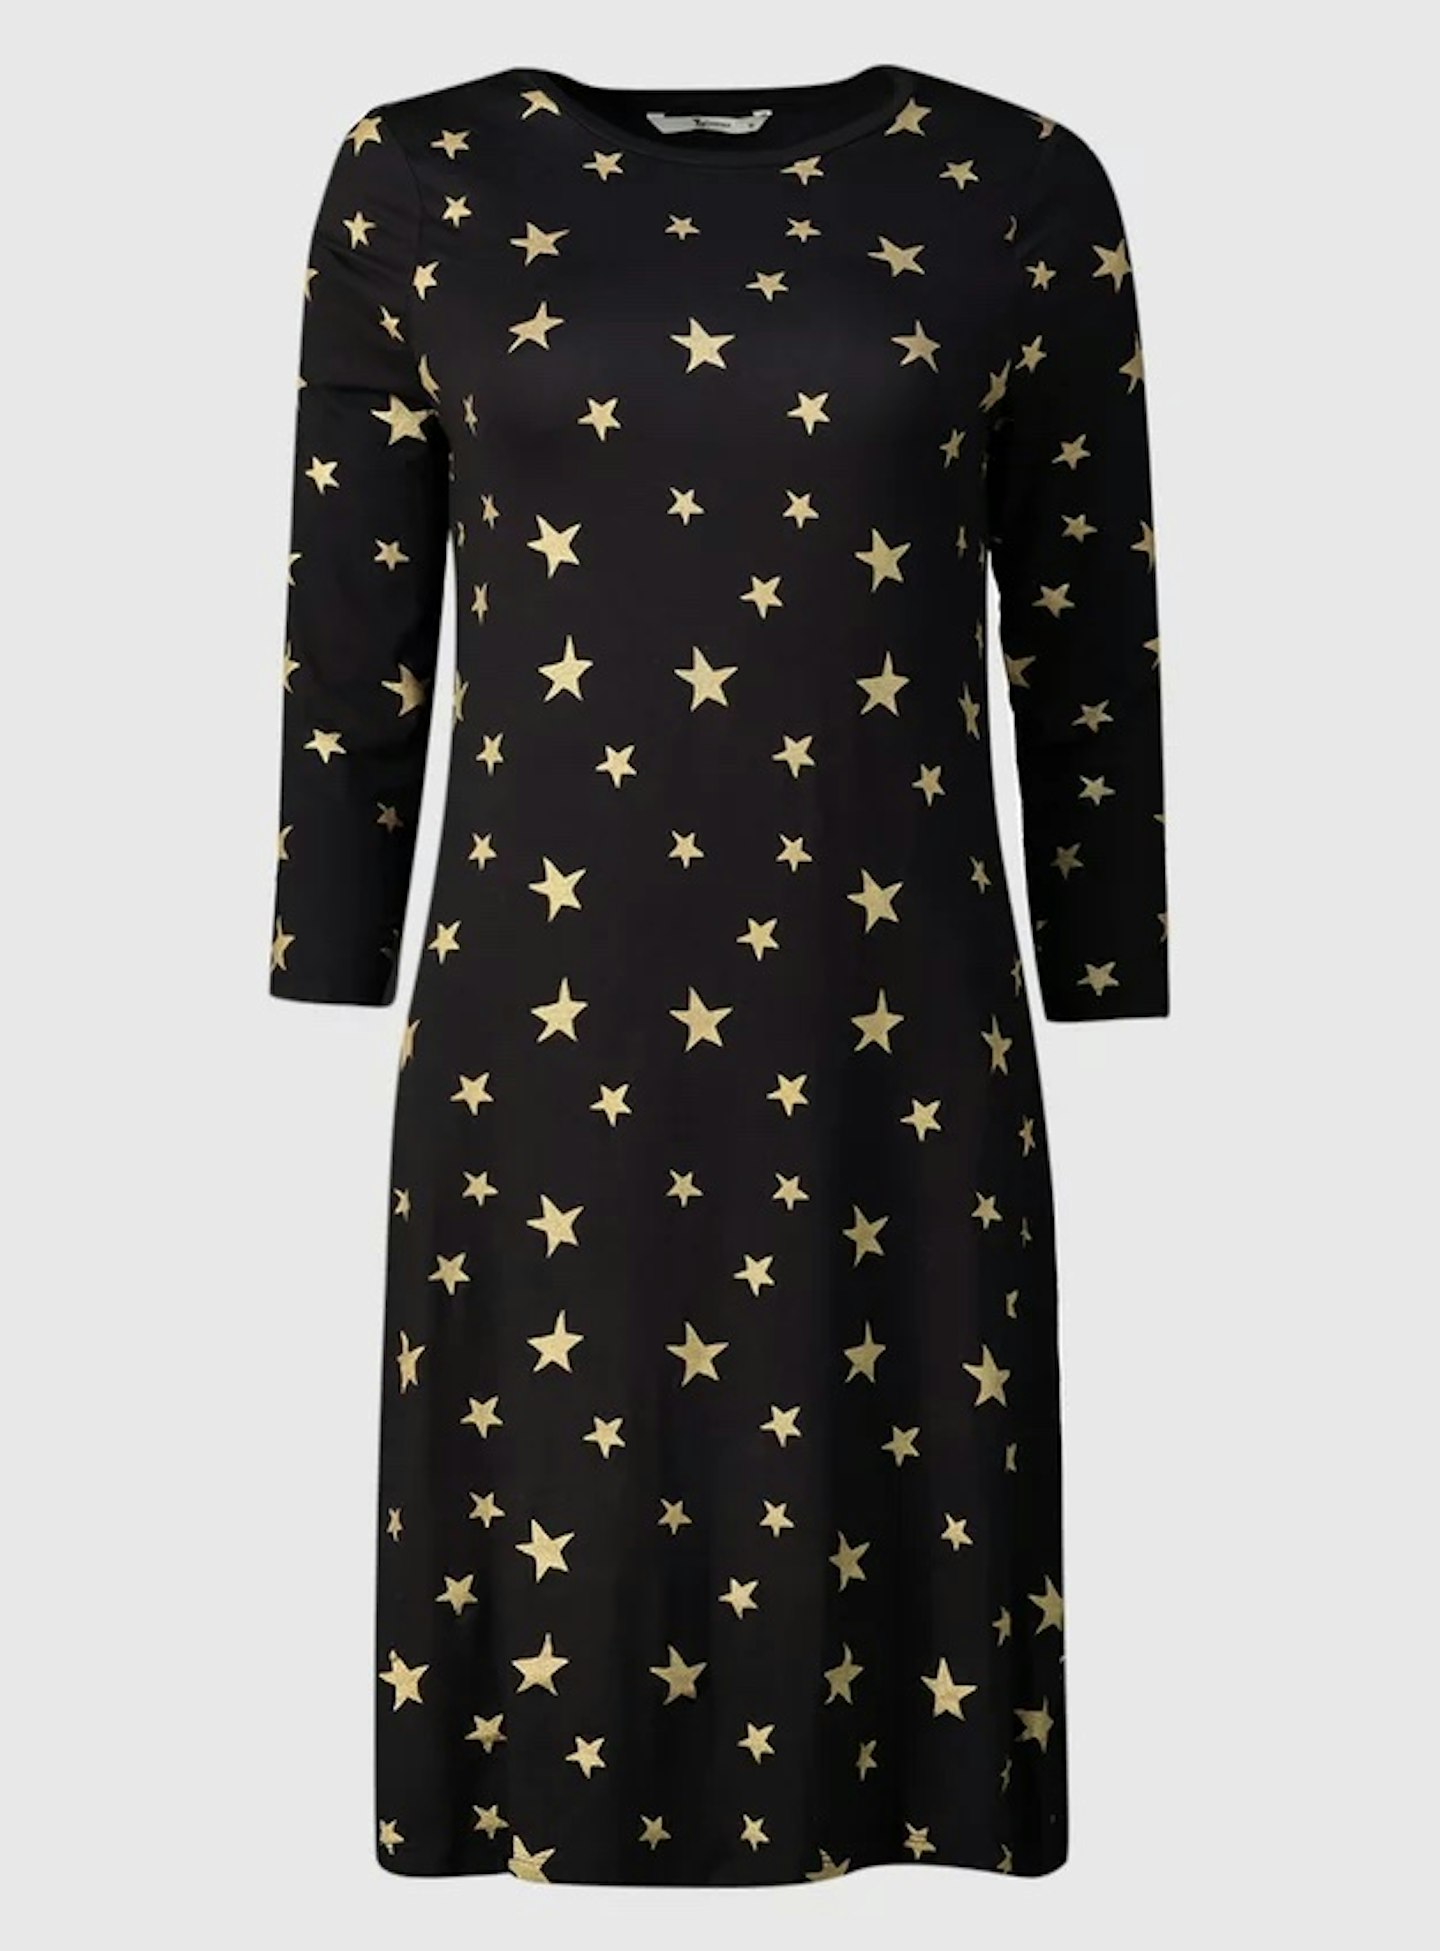 Christmas Black Star Swing Dress, £12